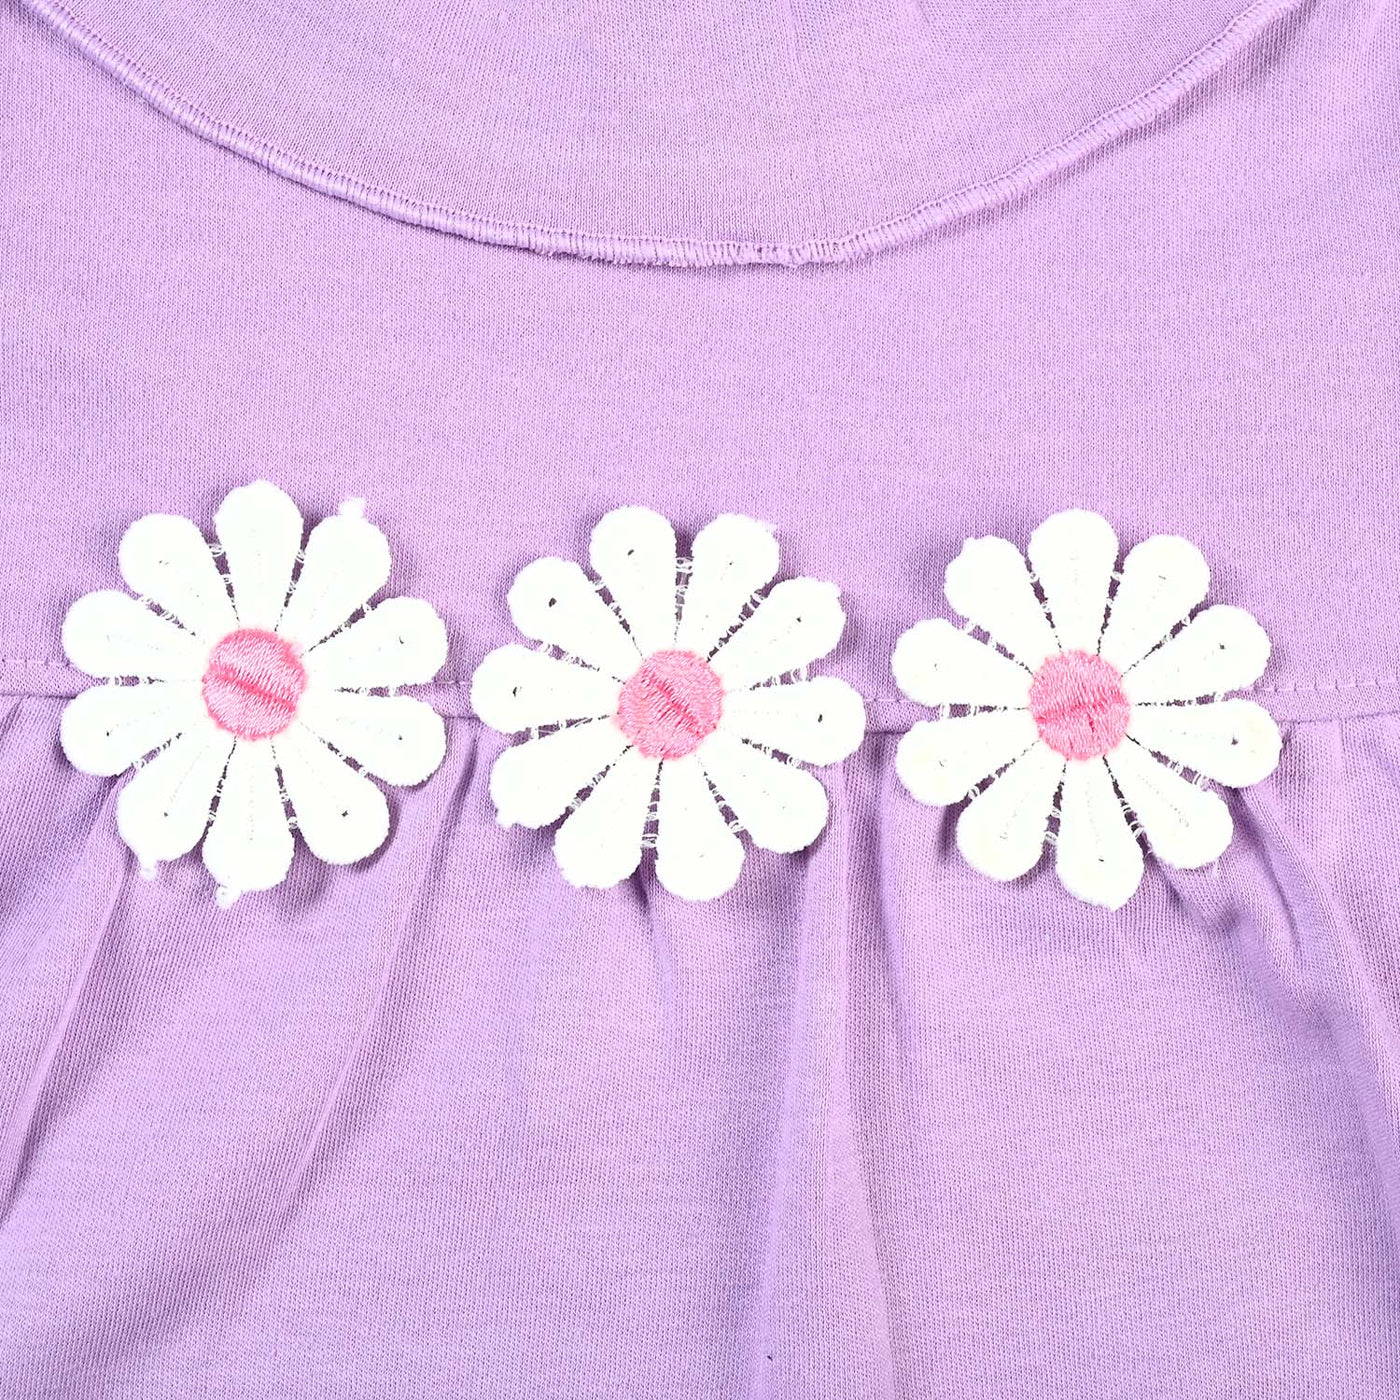 Infant Girls Cotton Interlock Knitted Romper Three Flowers-O.Bloom